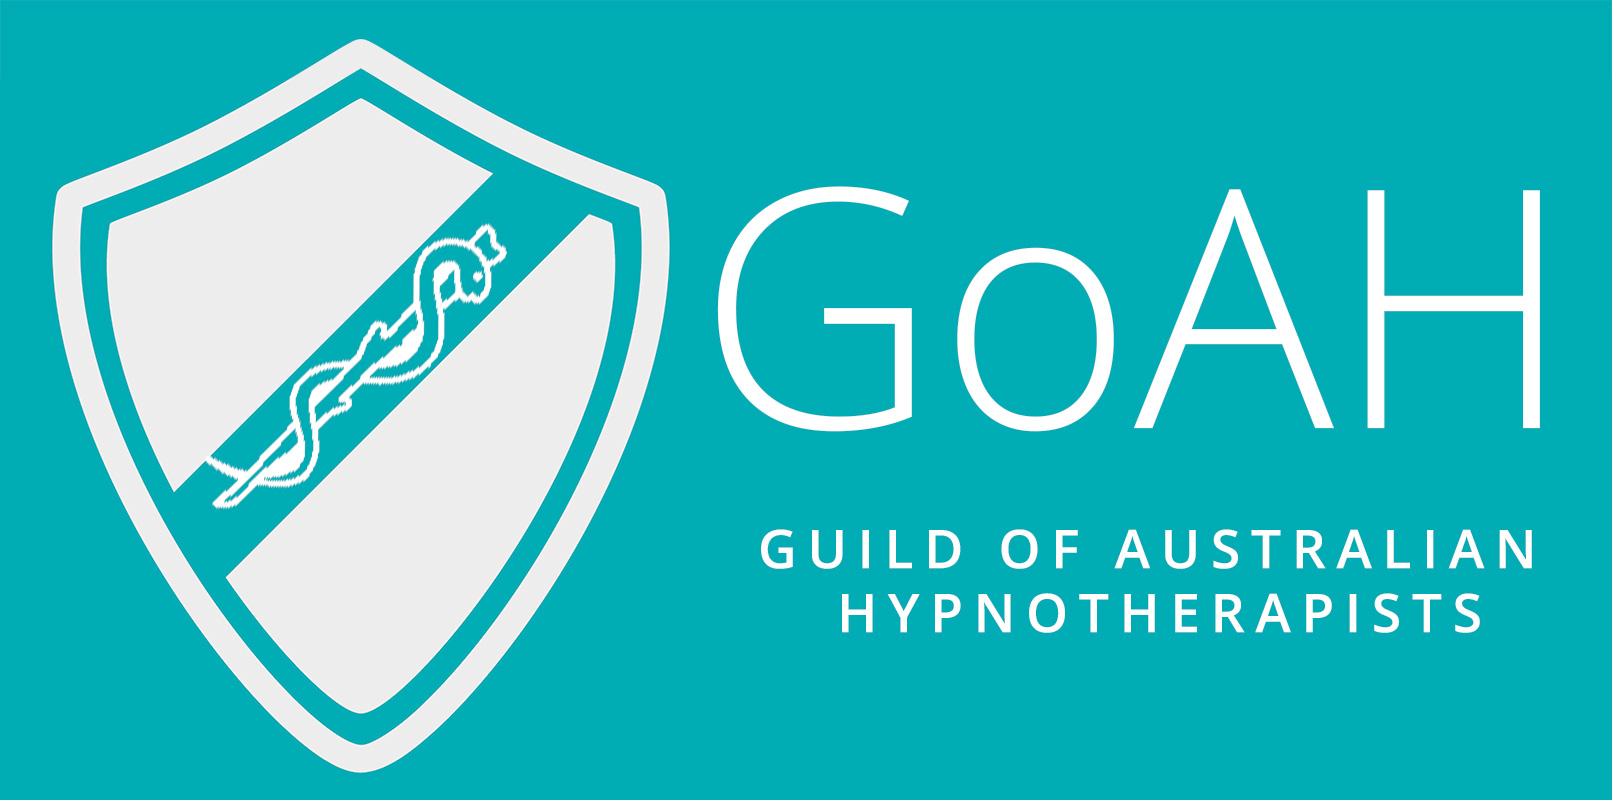 Hypnotherapy Logo